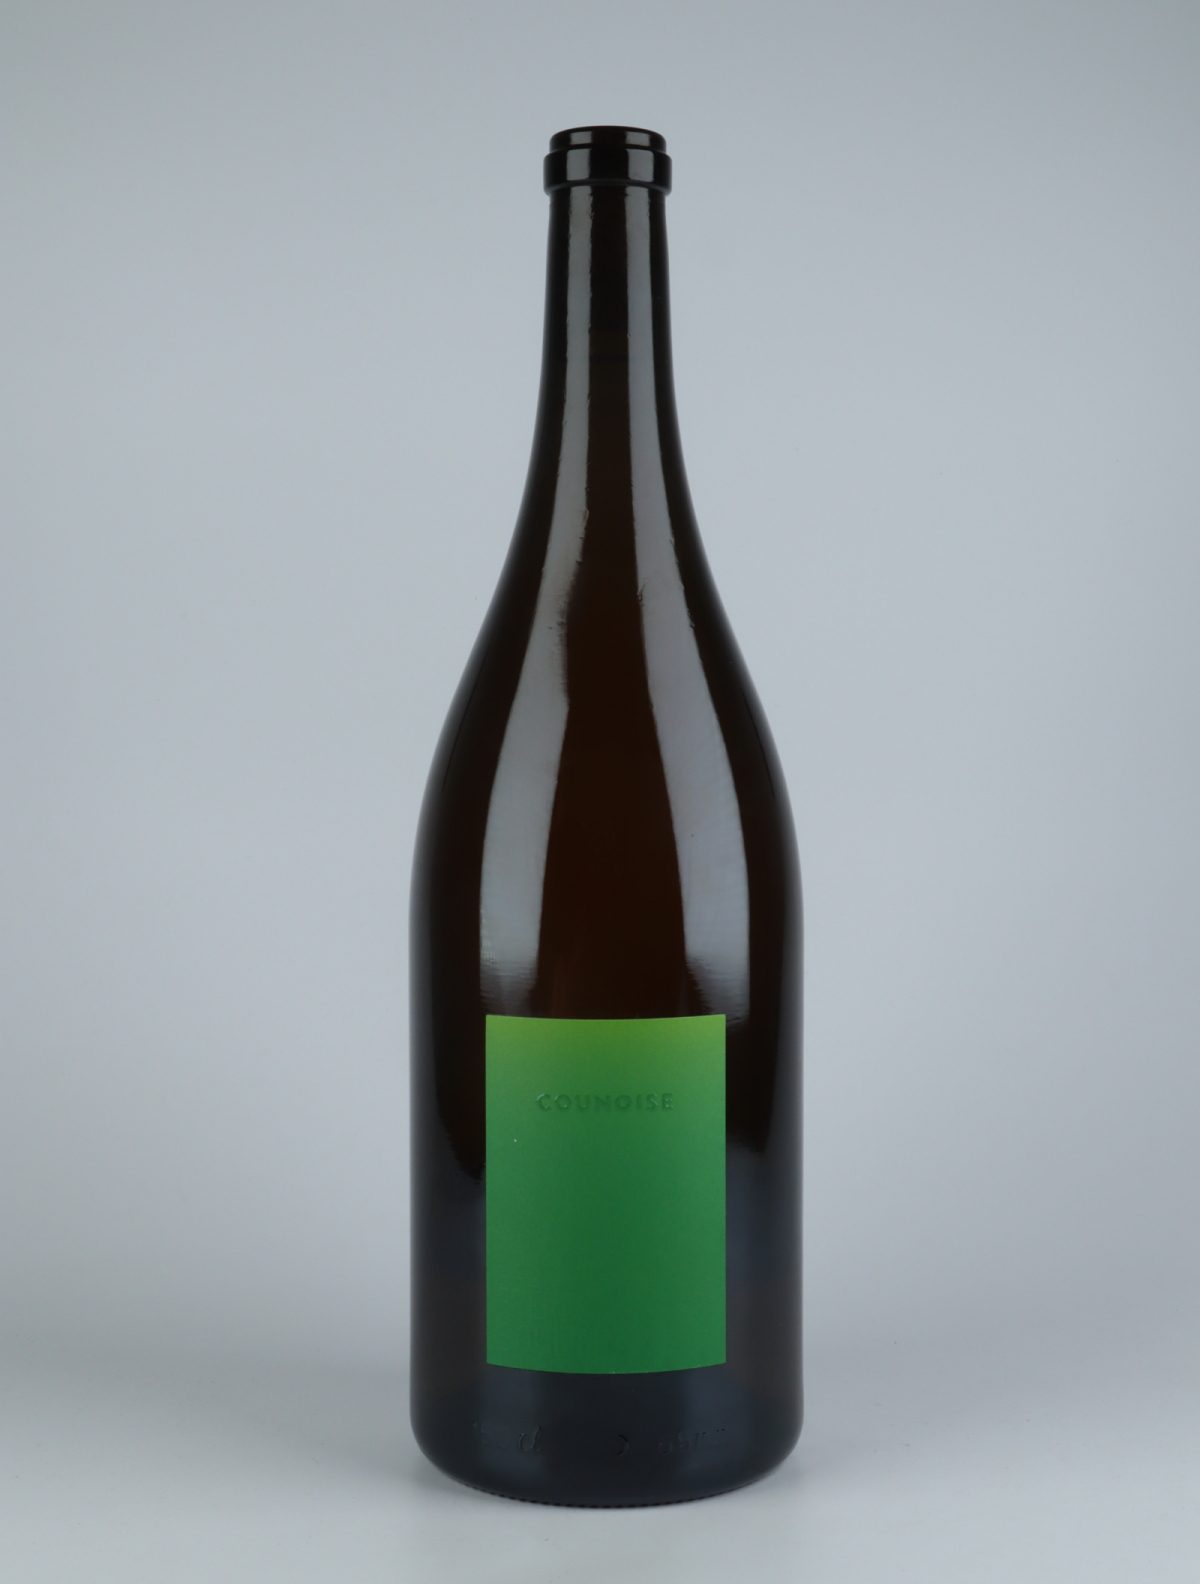 A bottle 2020 Counoise - Blanc des Noirs White wine from Les Frères Soulier, Rhône in France